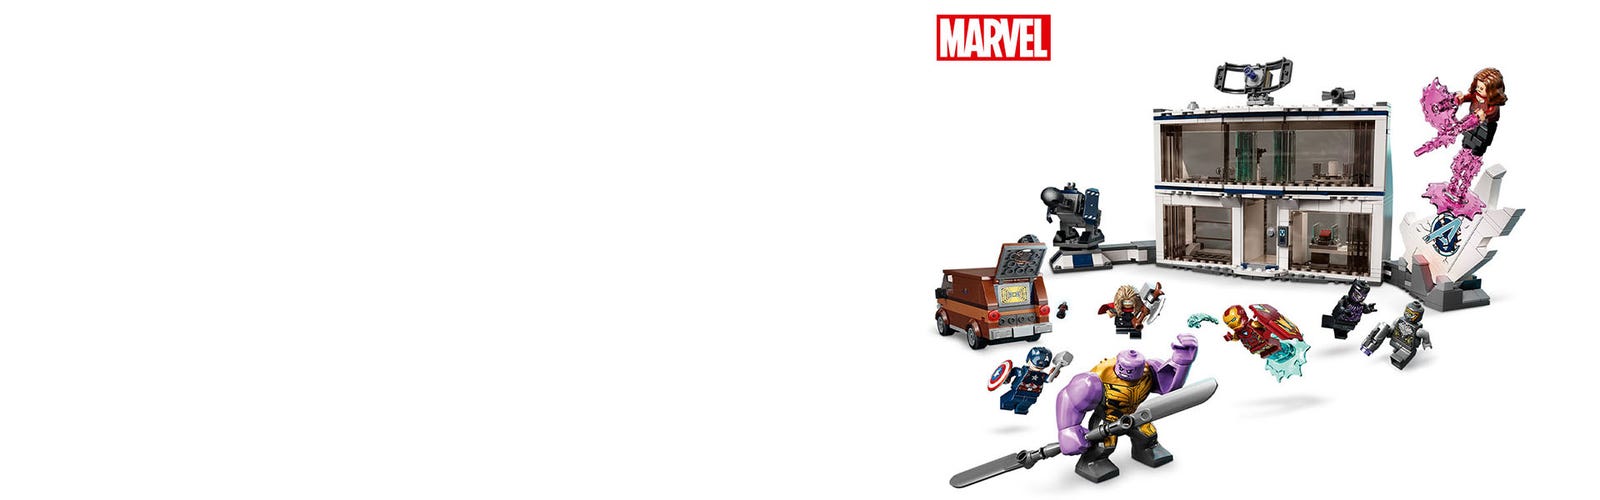 LEGO 76192 Super Heroes Avengers: Endgame Final Battle